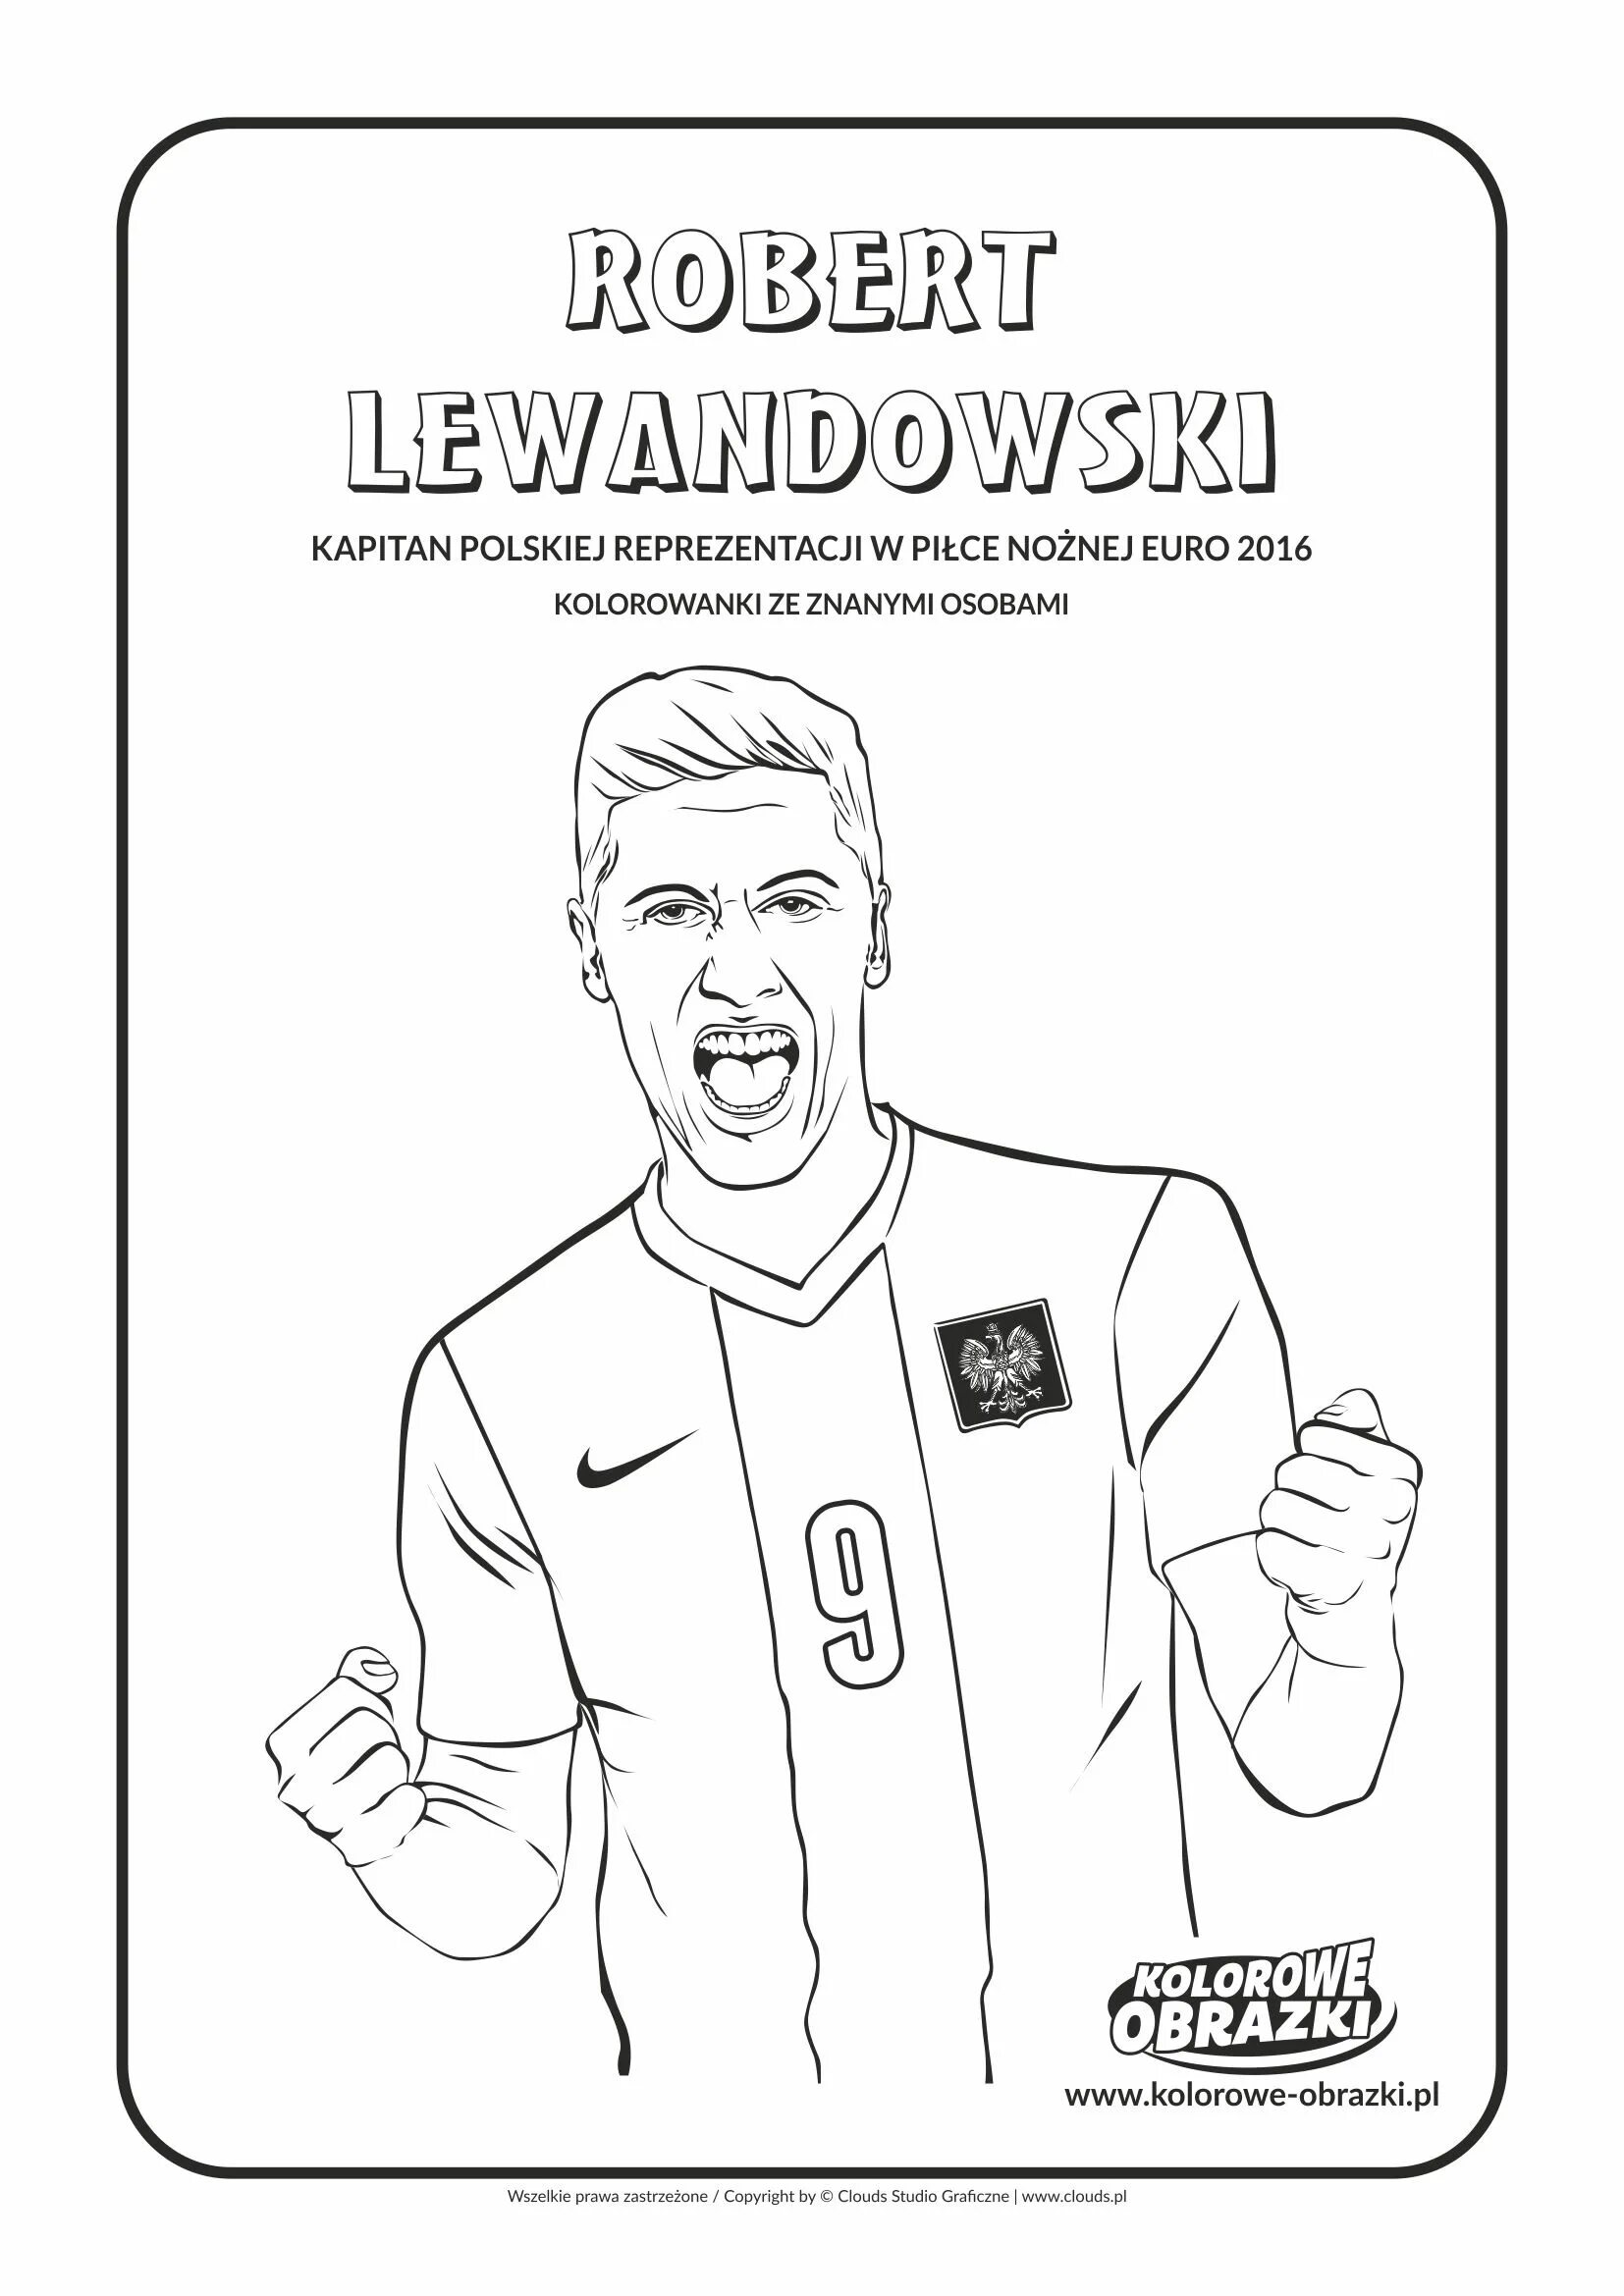 Lewandowski glitter coloring